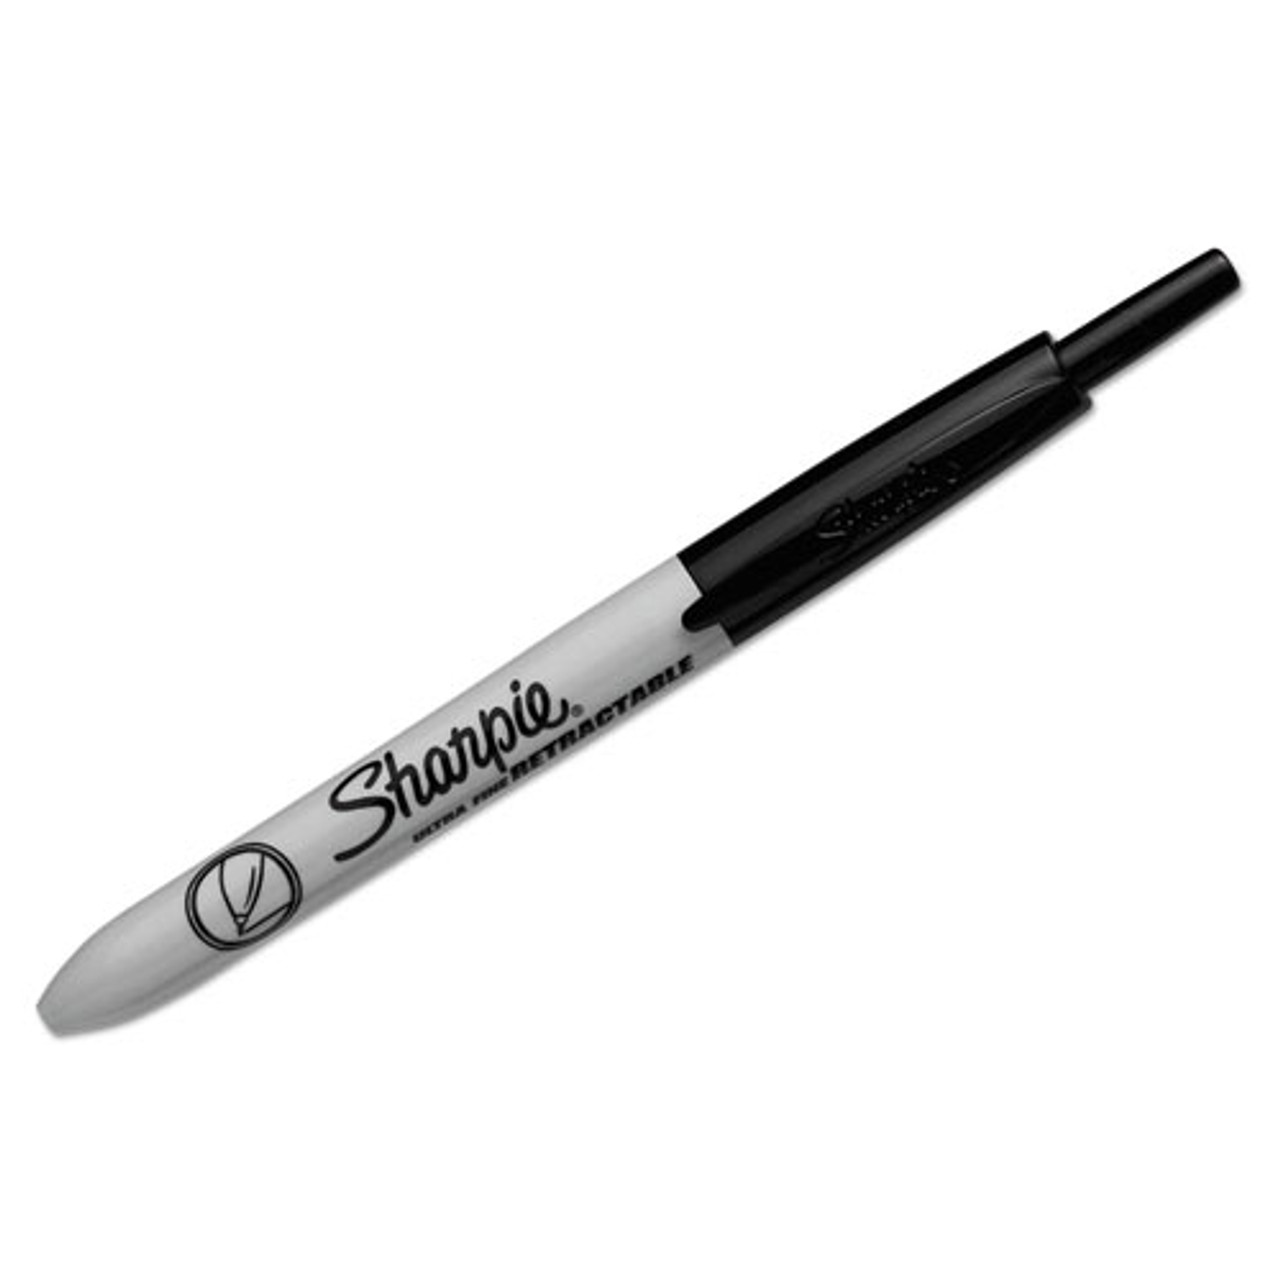 Sharpie Ultra Fine Tip Permanent Marker - SAN37665PP 